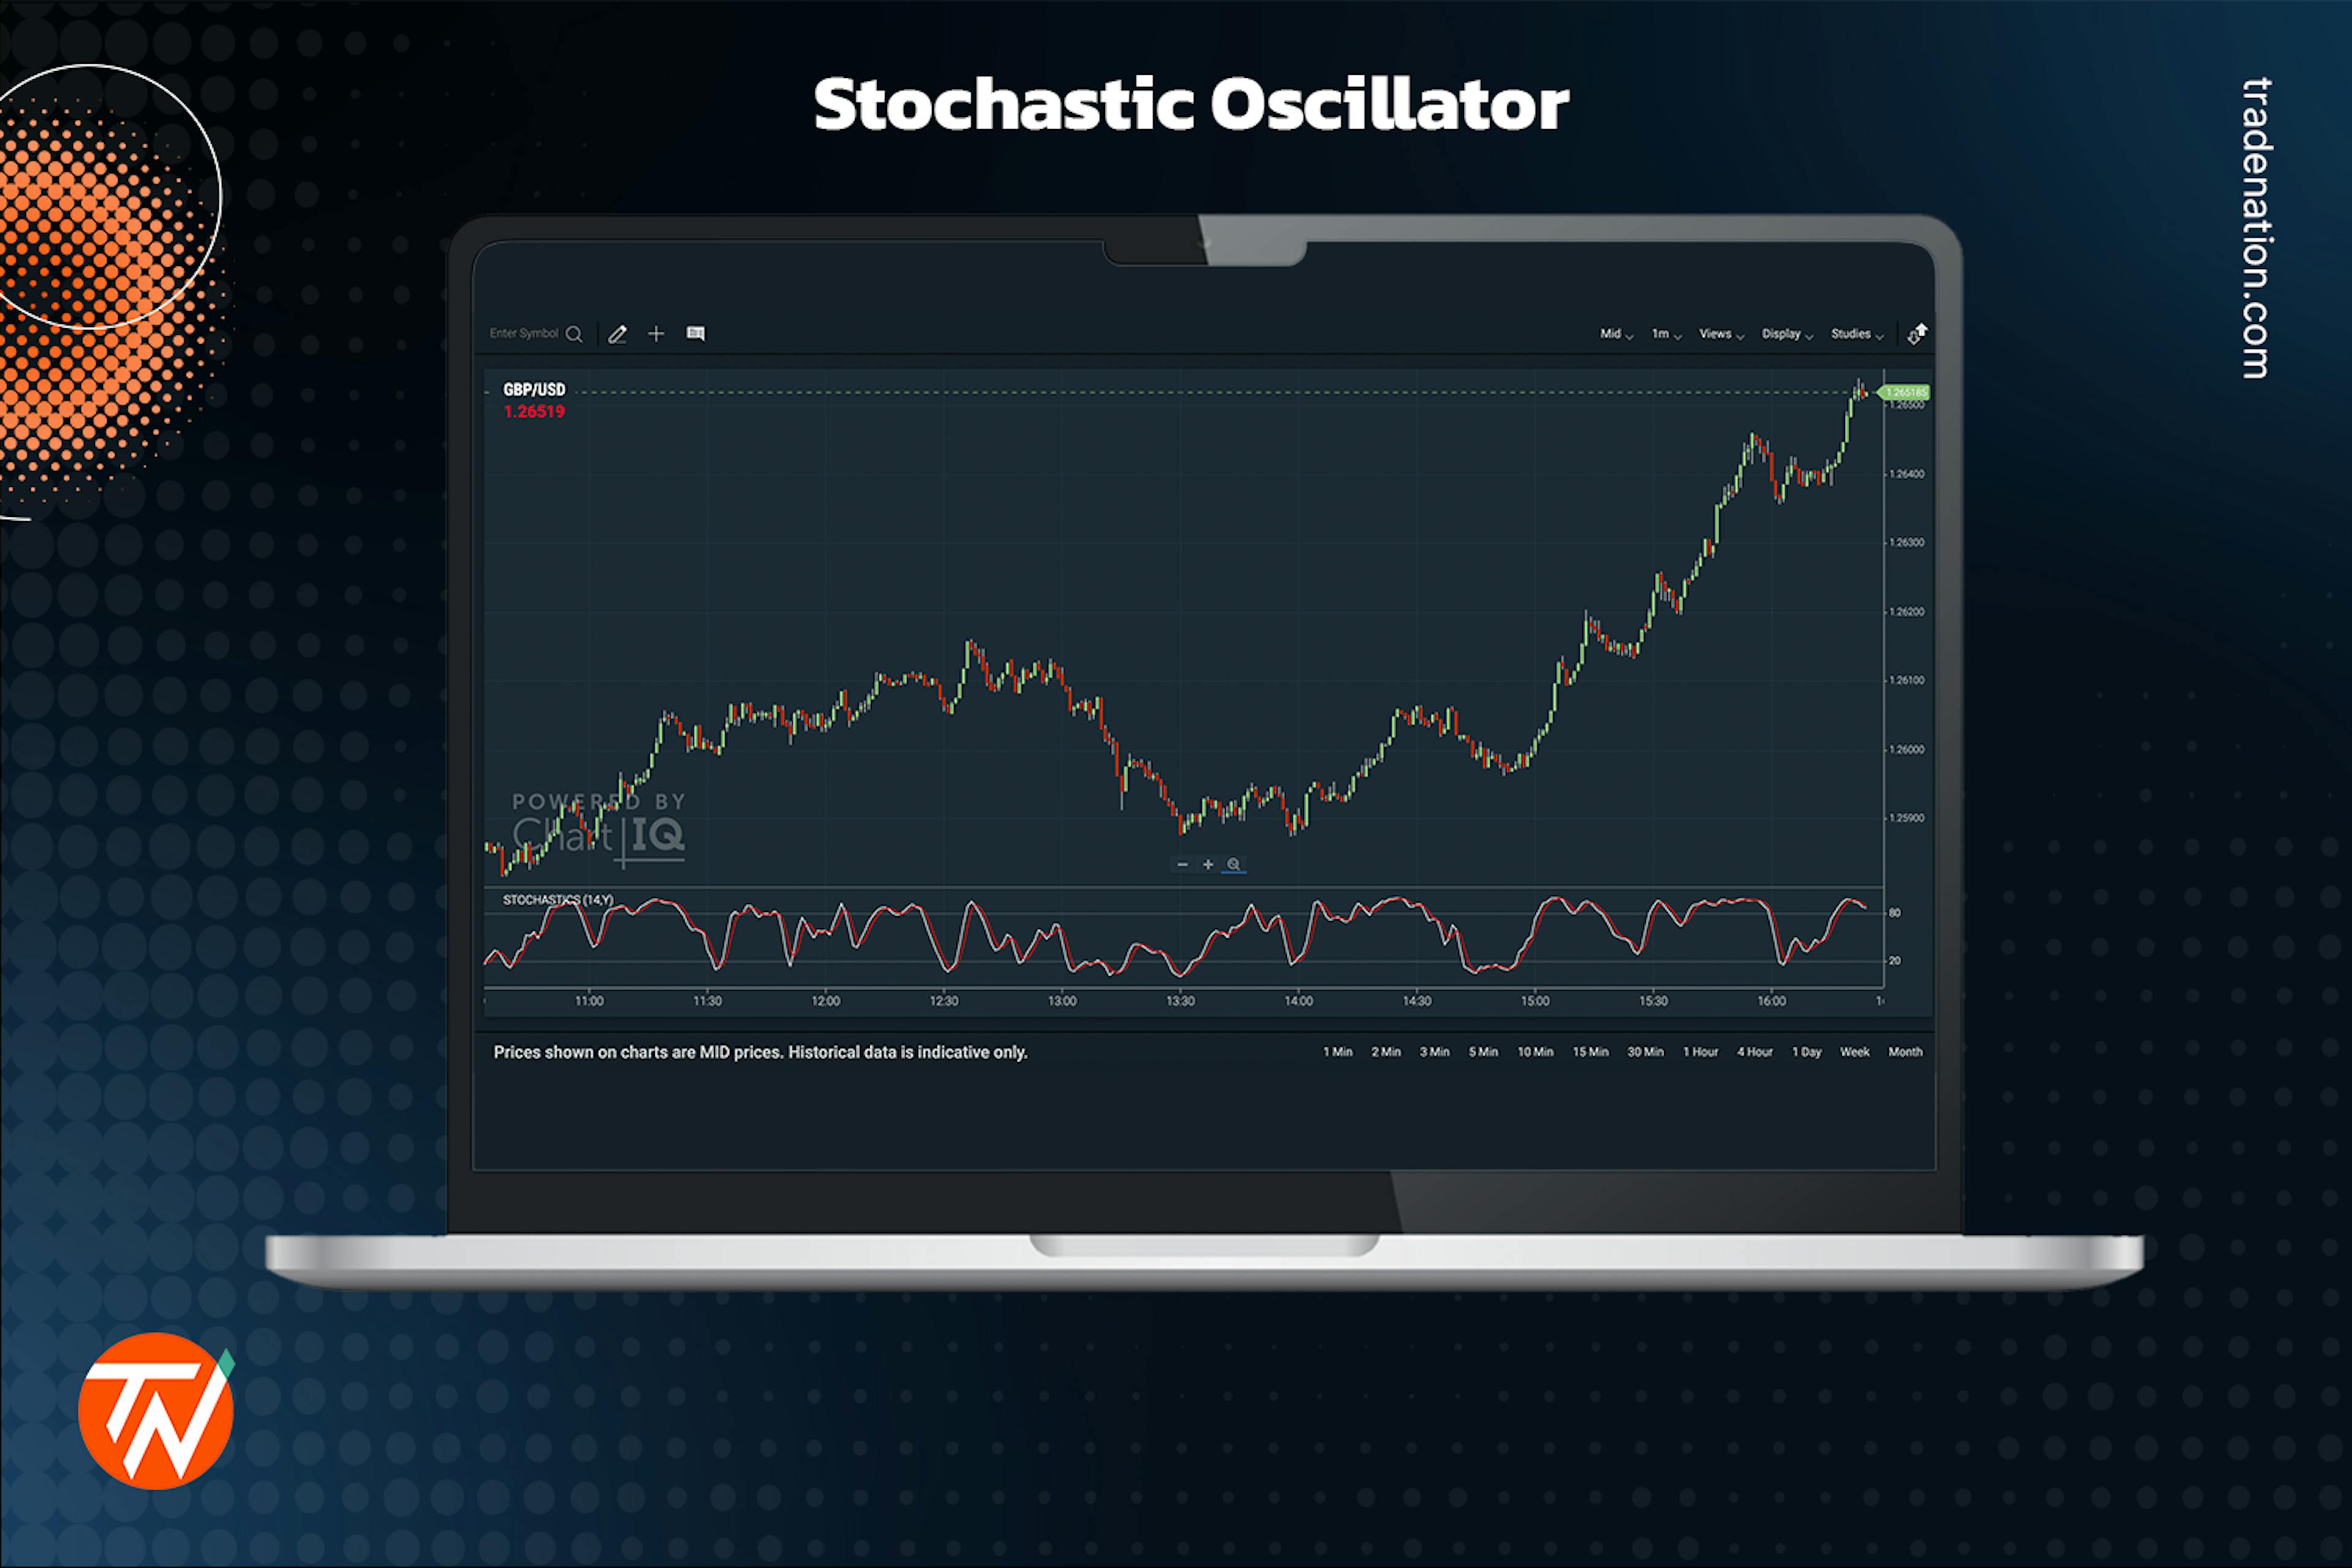 Stochastic oscillator in trading demonstrating